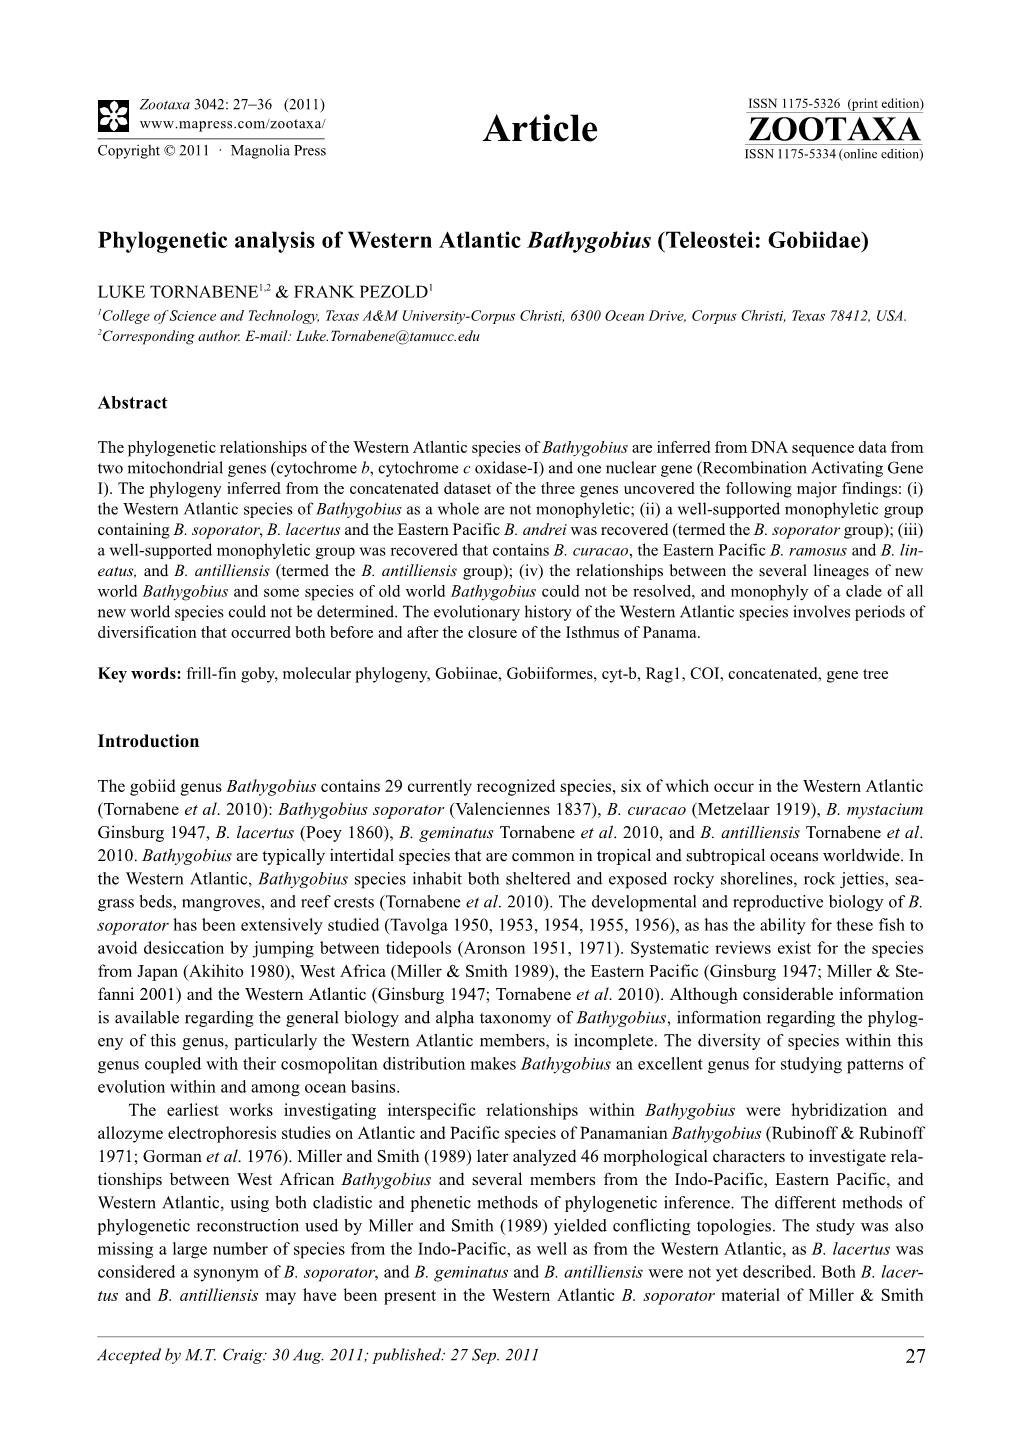 Phylogenetic Analysis of Western Atlantic Bathygobius (Teleostei: Gobiidae)